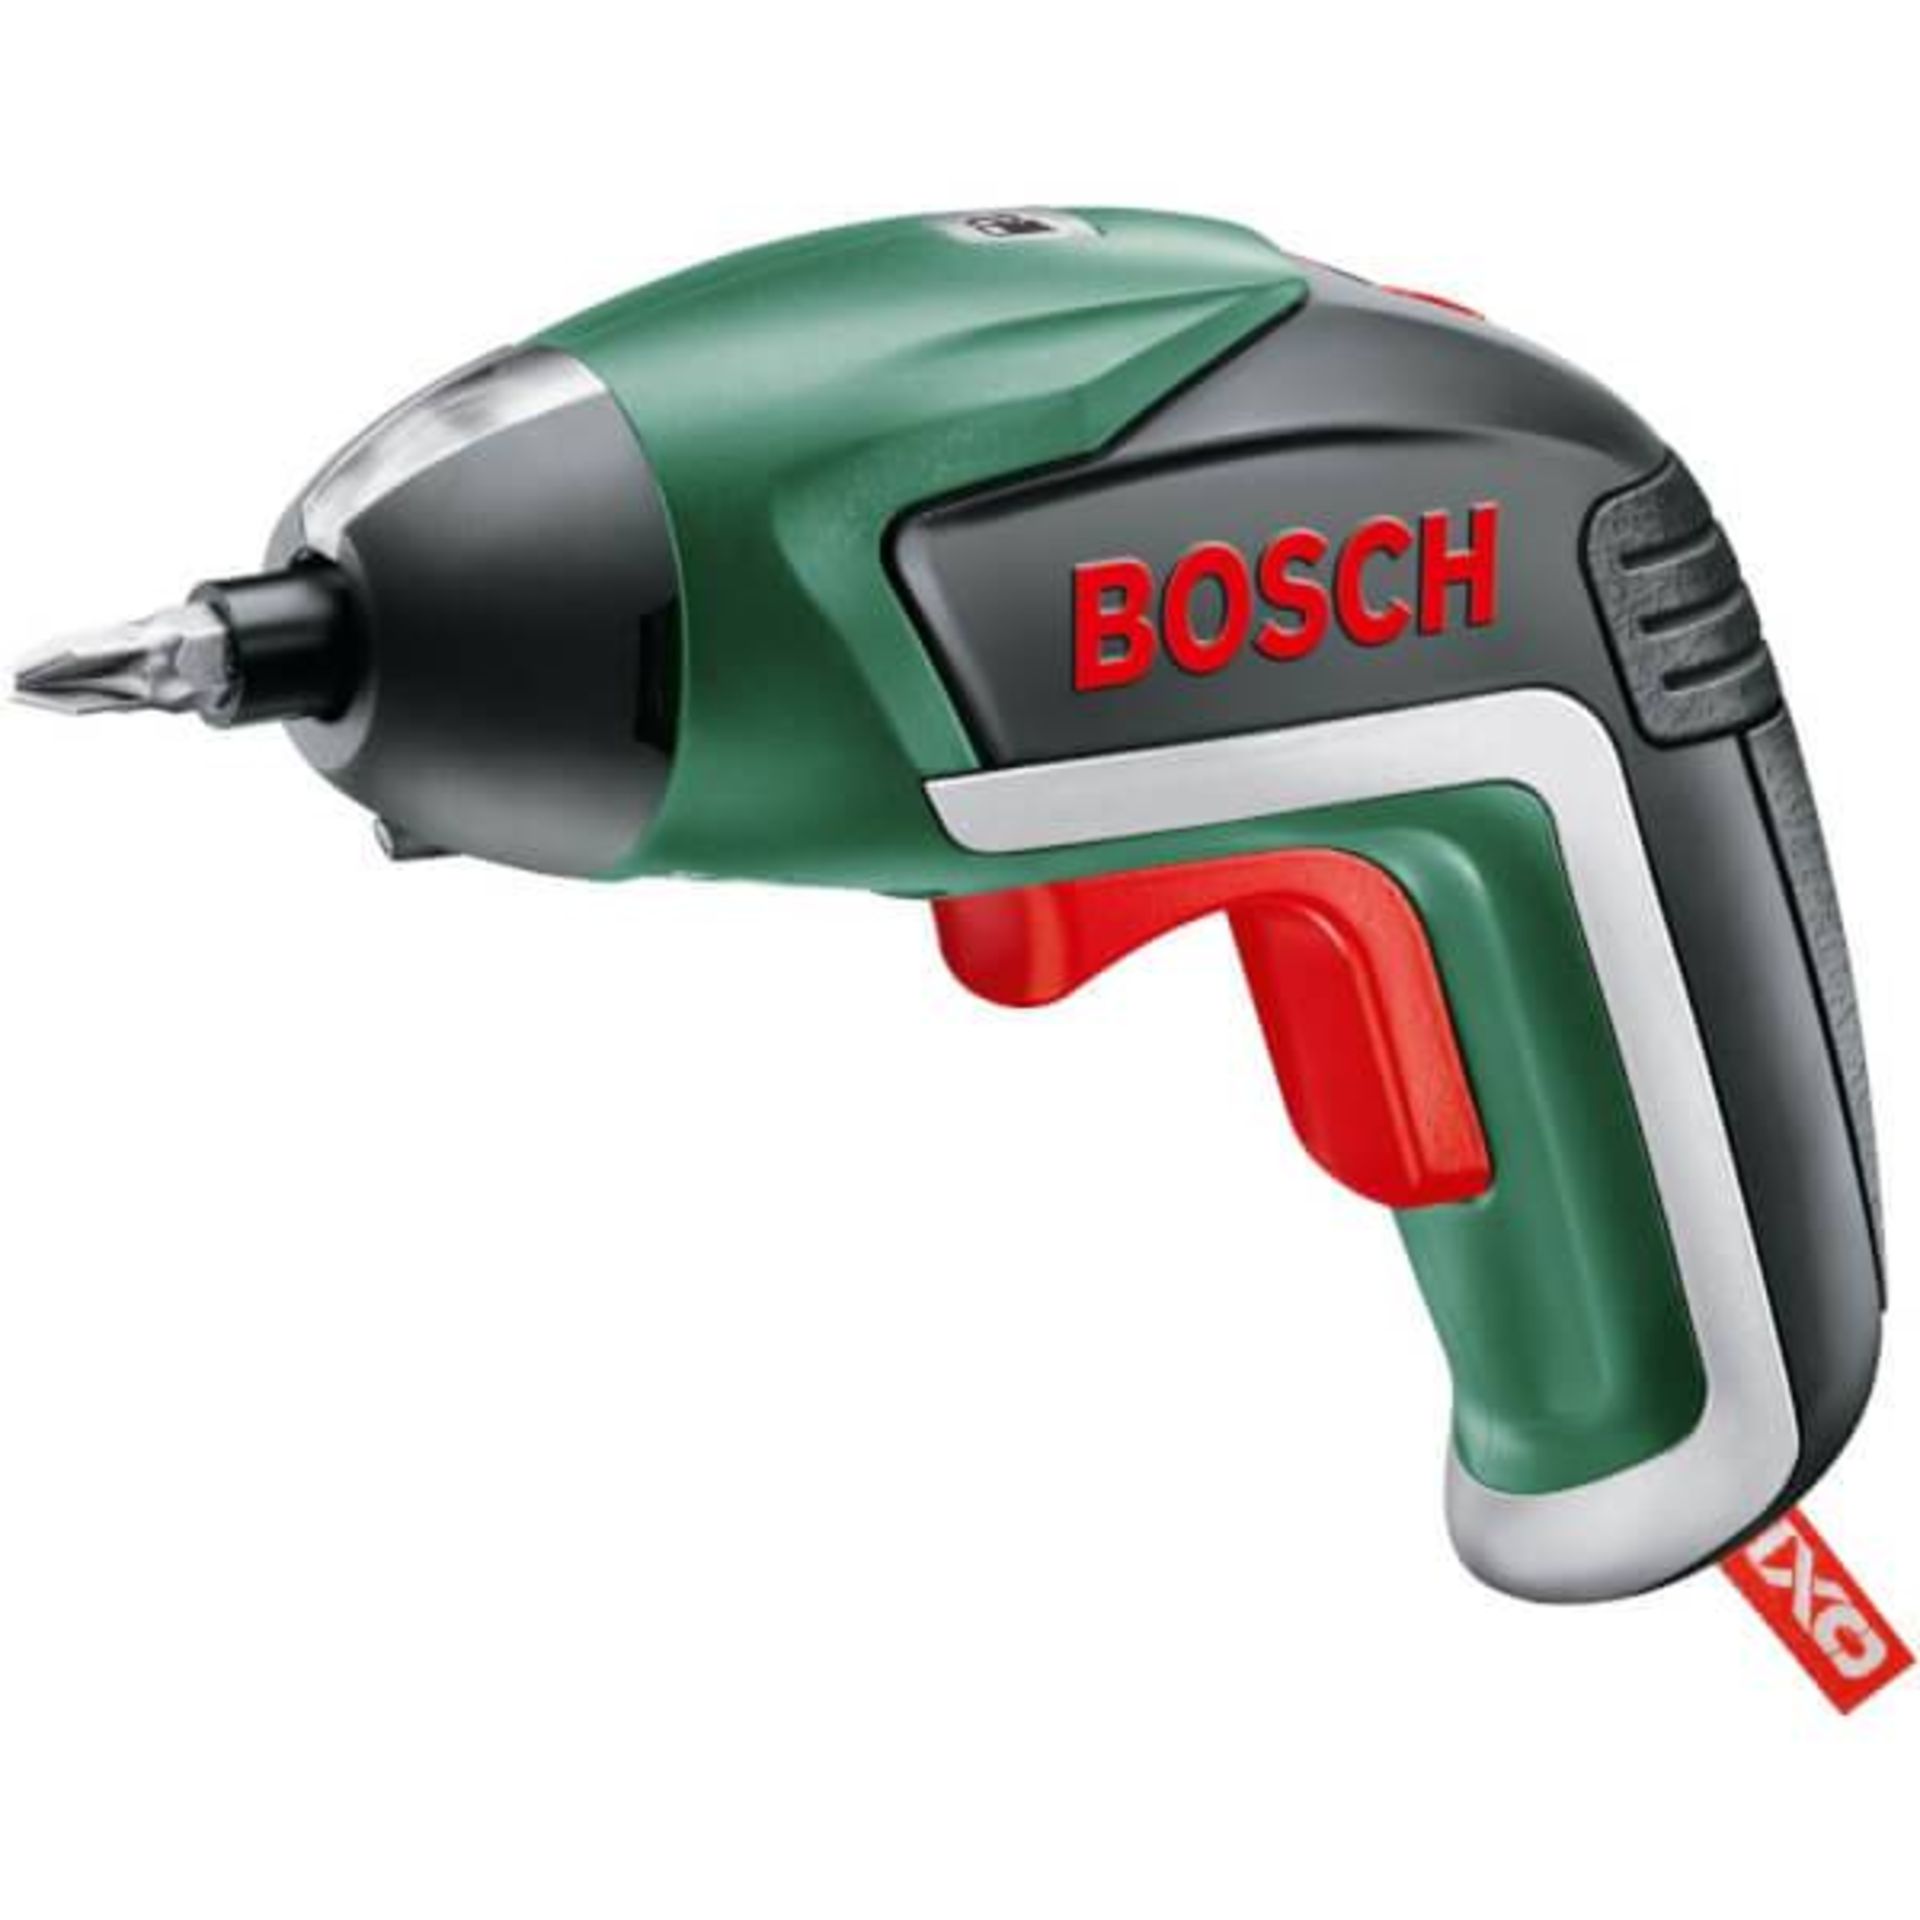 (R15C) 3x Bosch Items. 1x Universal Impact Drill 700. 1x PSR Select Power Screwdriver. 1x IXO Powe - Image 3 of 4